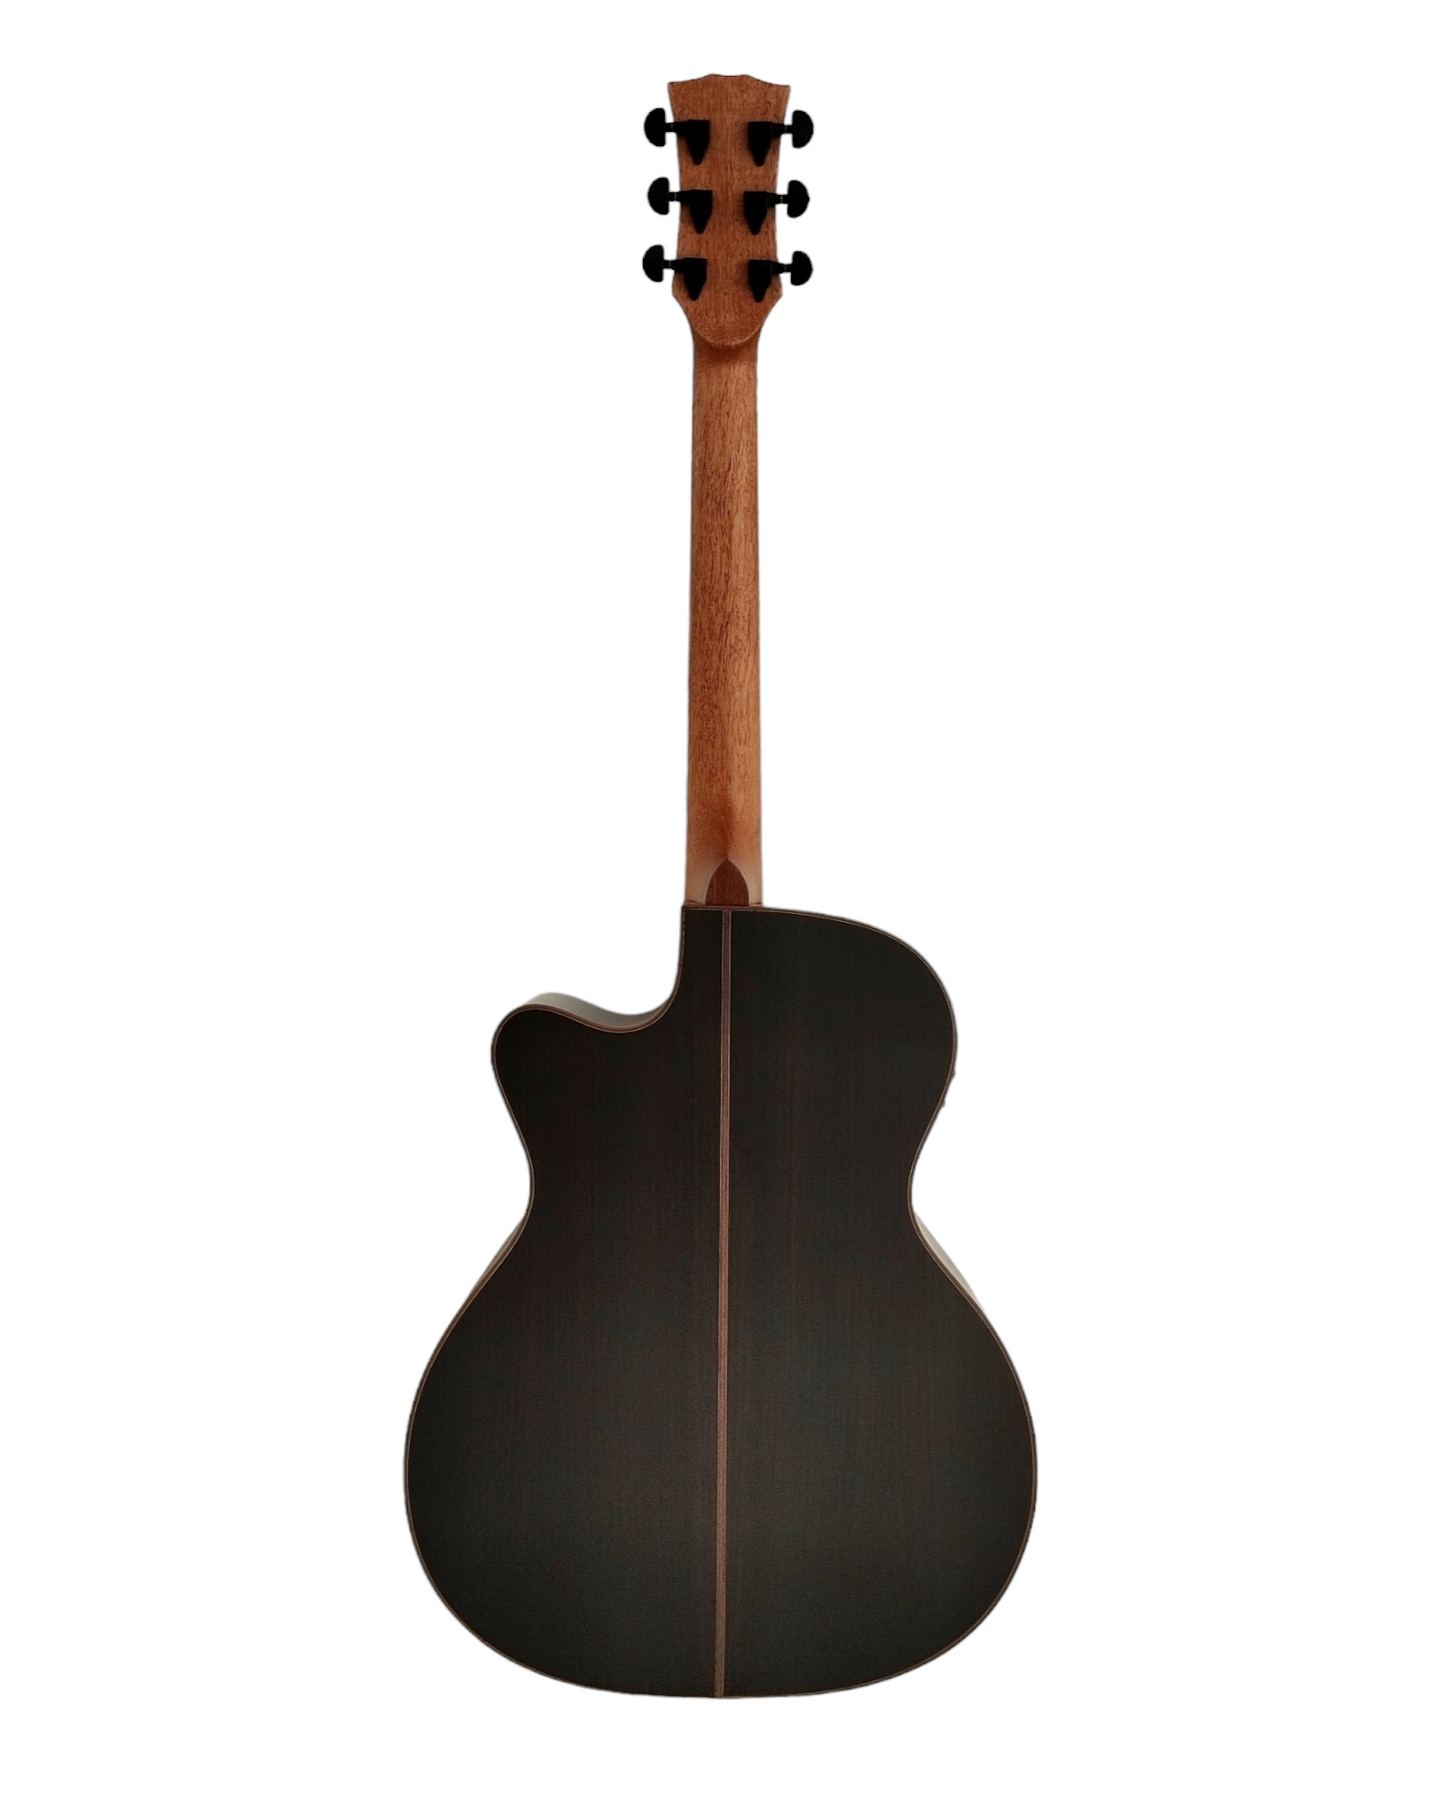 Klema Solid Cedar Top Indian Rosewood Body Fishman Pickup/Tuner Acoustic Guitar - Natural K300JCCE